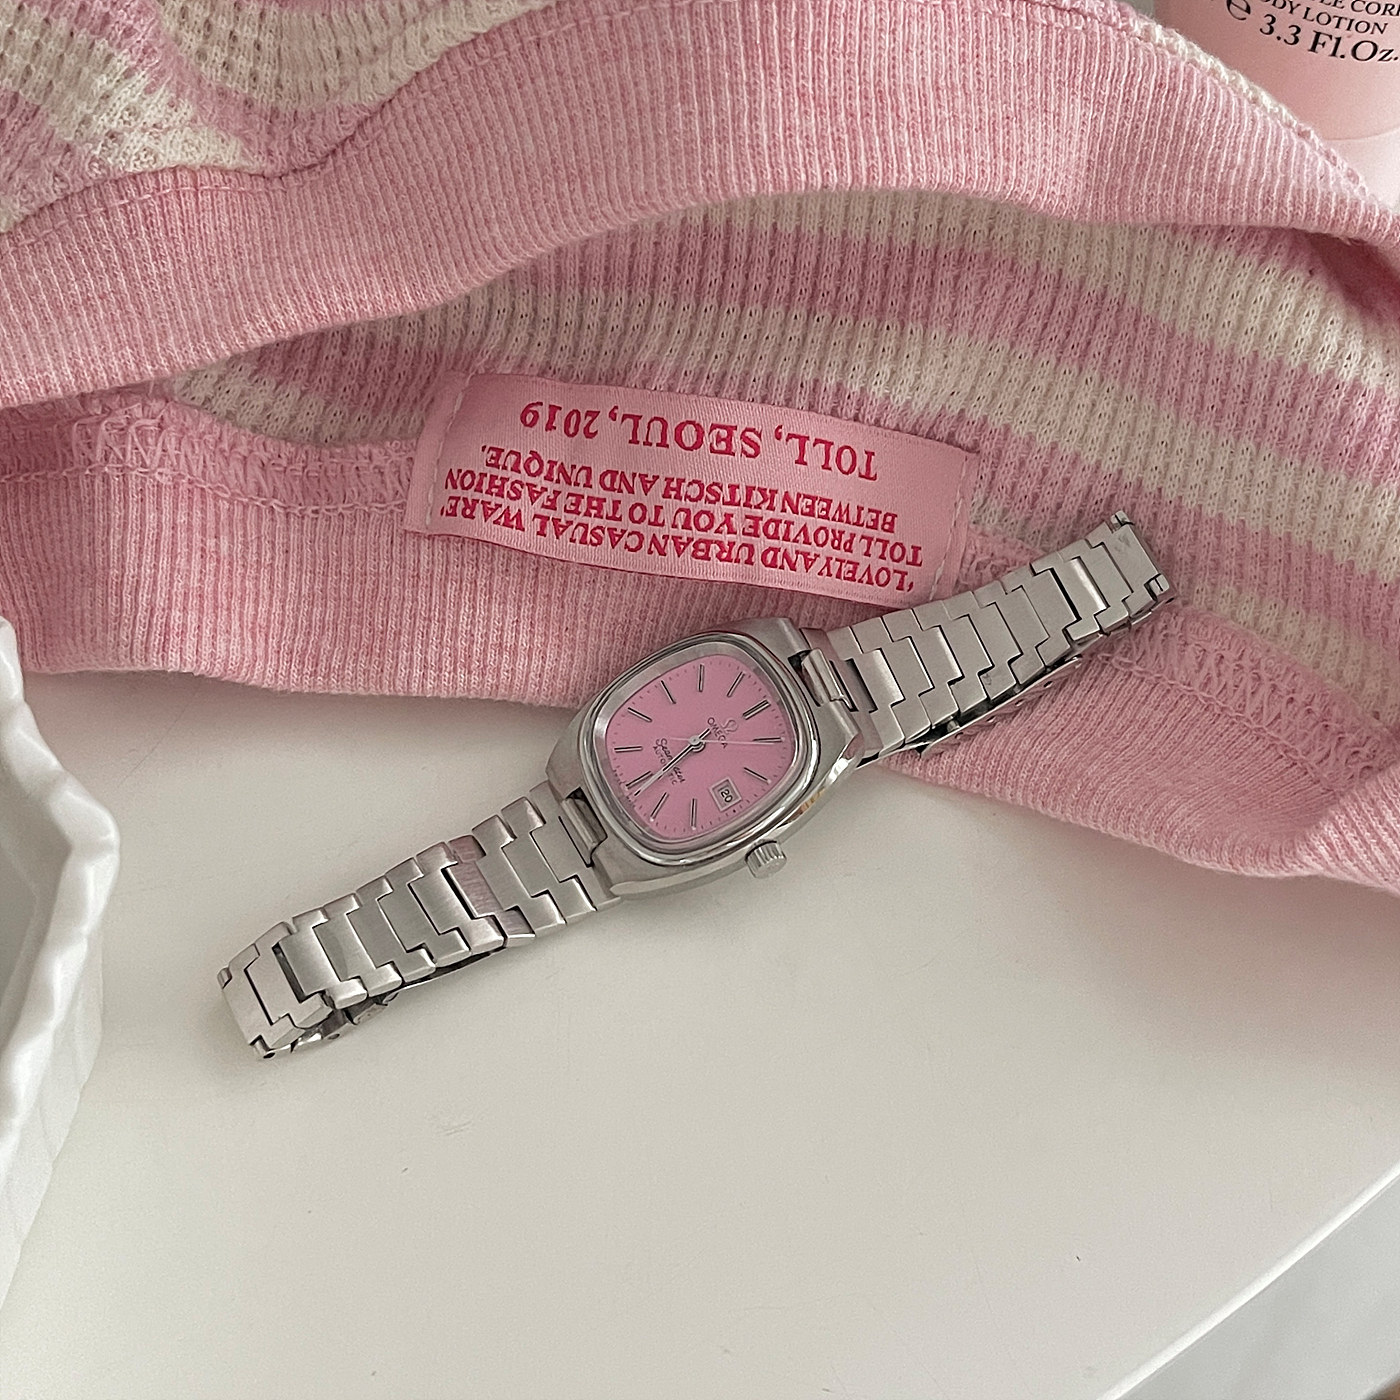 OMEGA Seamaster automatic date pink watch